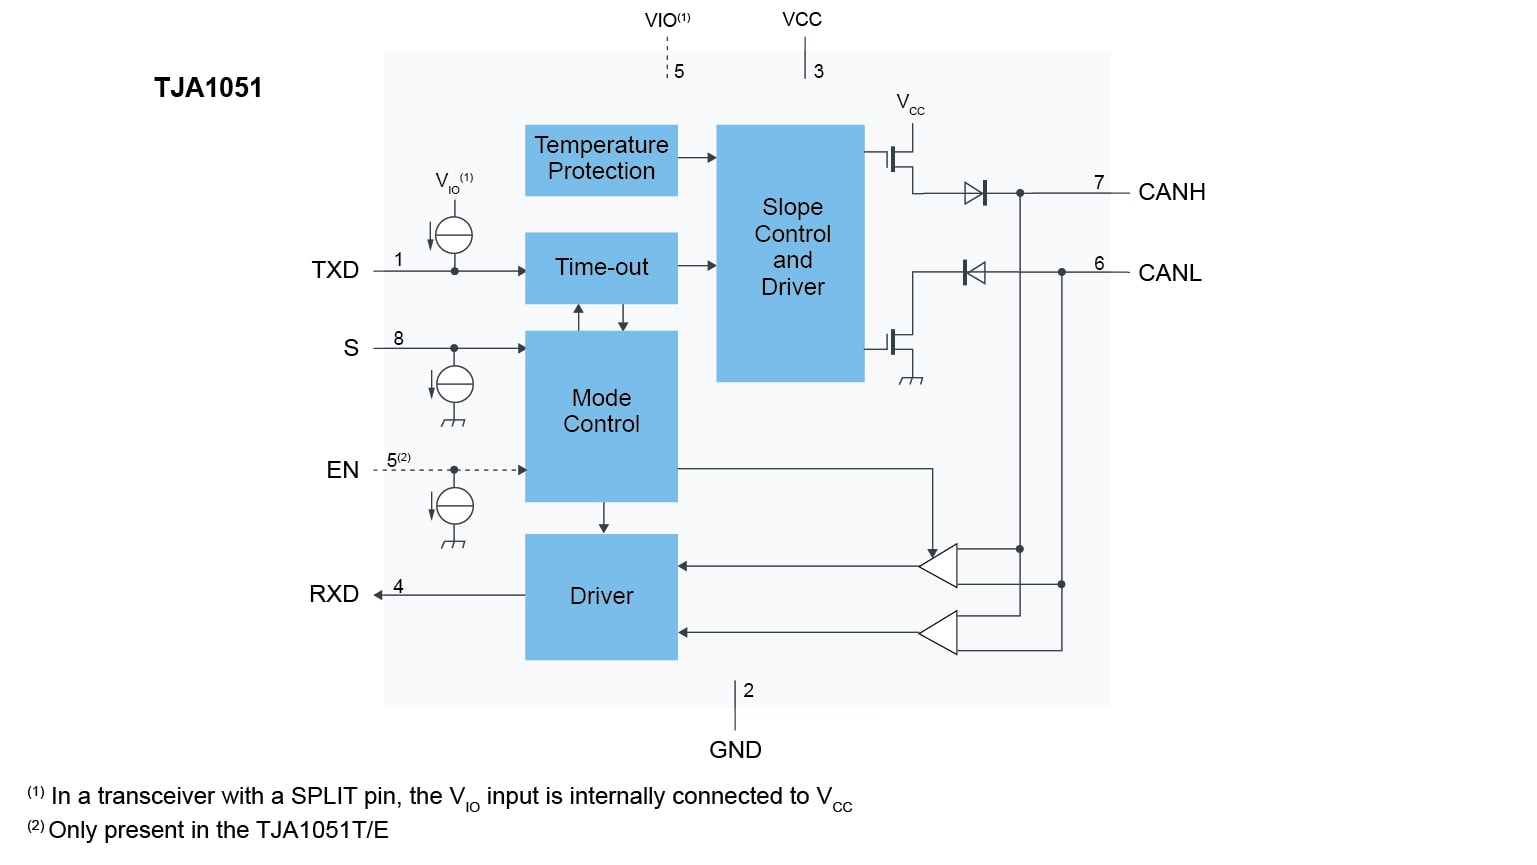 TJA1051 High-speed CAN transceiver block diagram